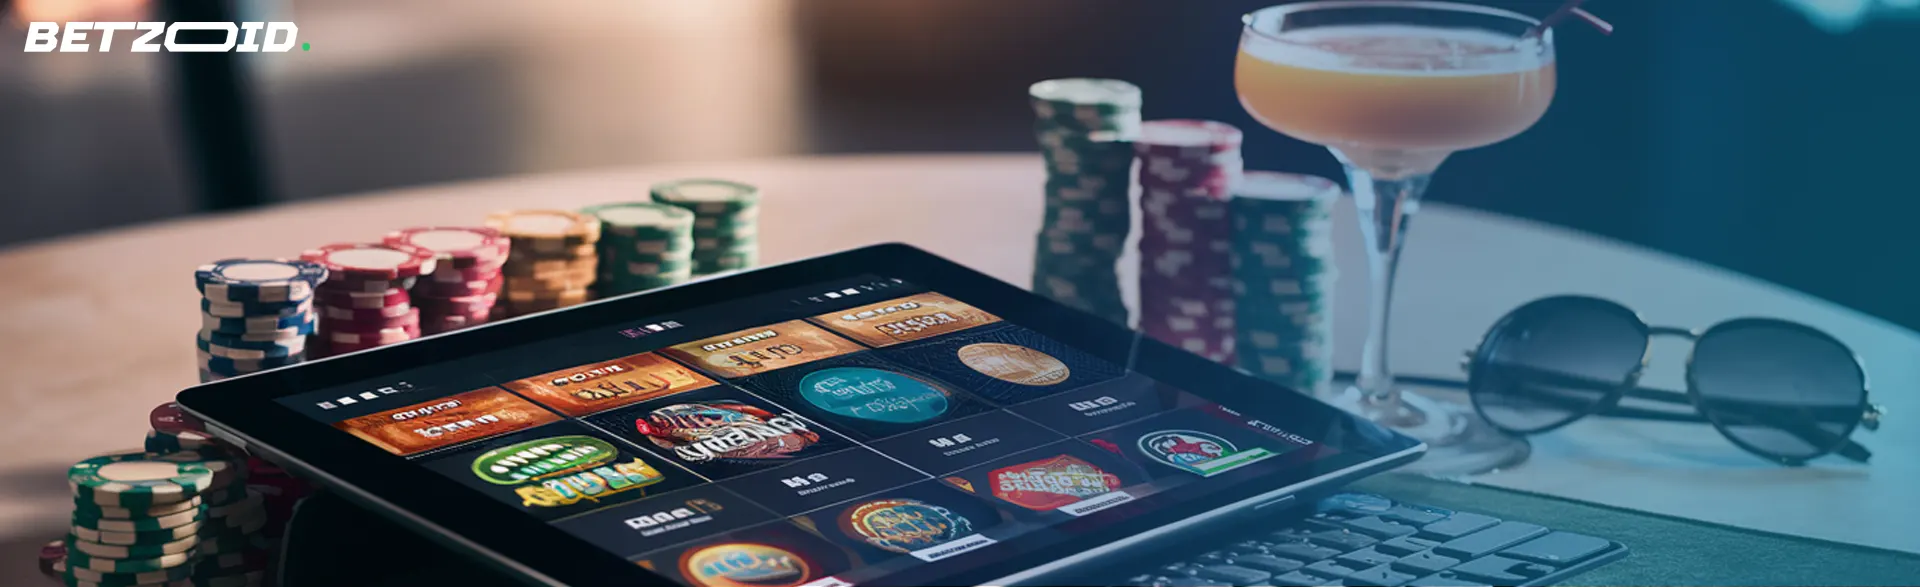 Online casino with $3 deposit in Australia.